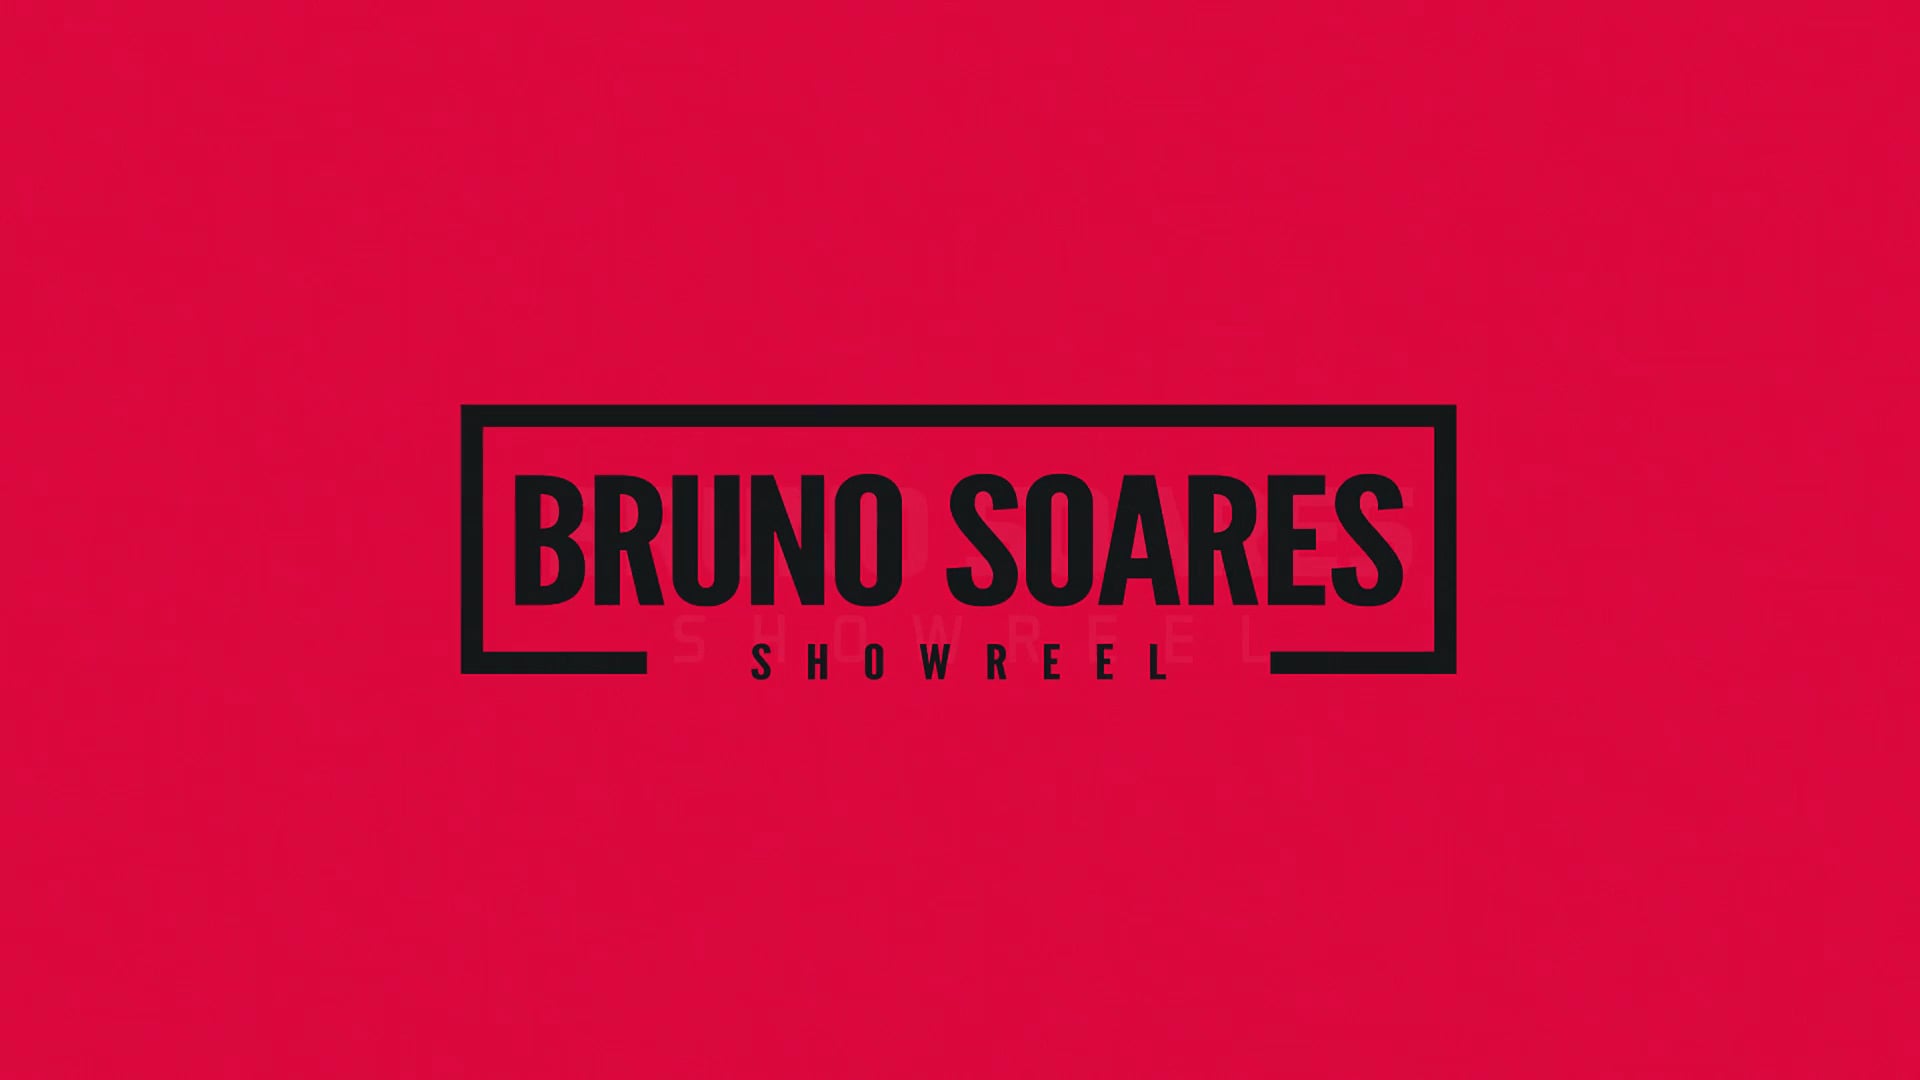 Bruno Soares - Director Showreel until 2021